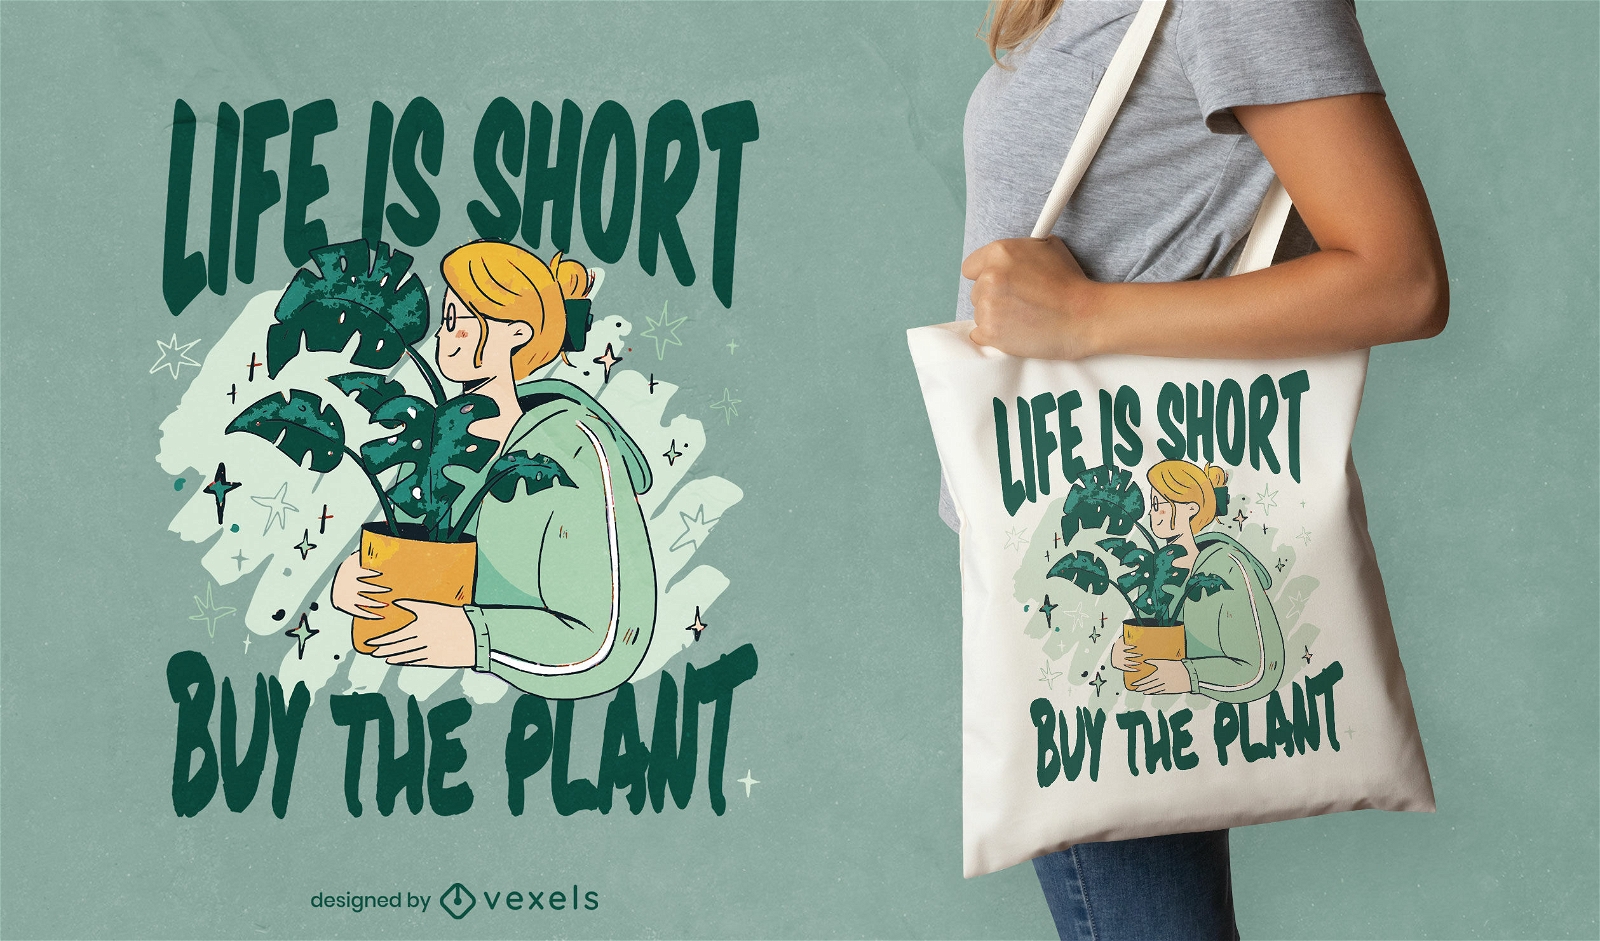 Buy plants quote tote bag design